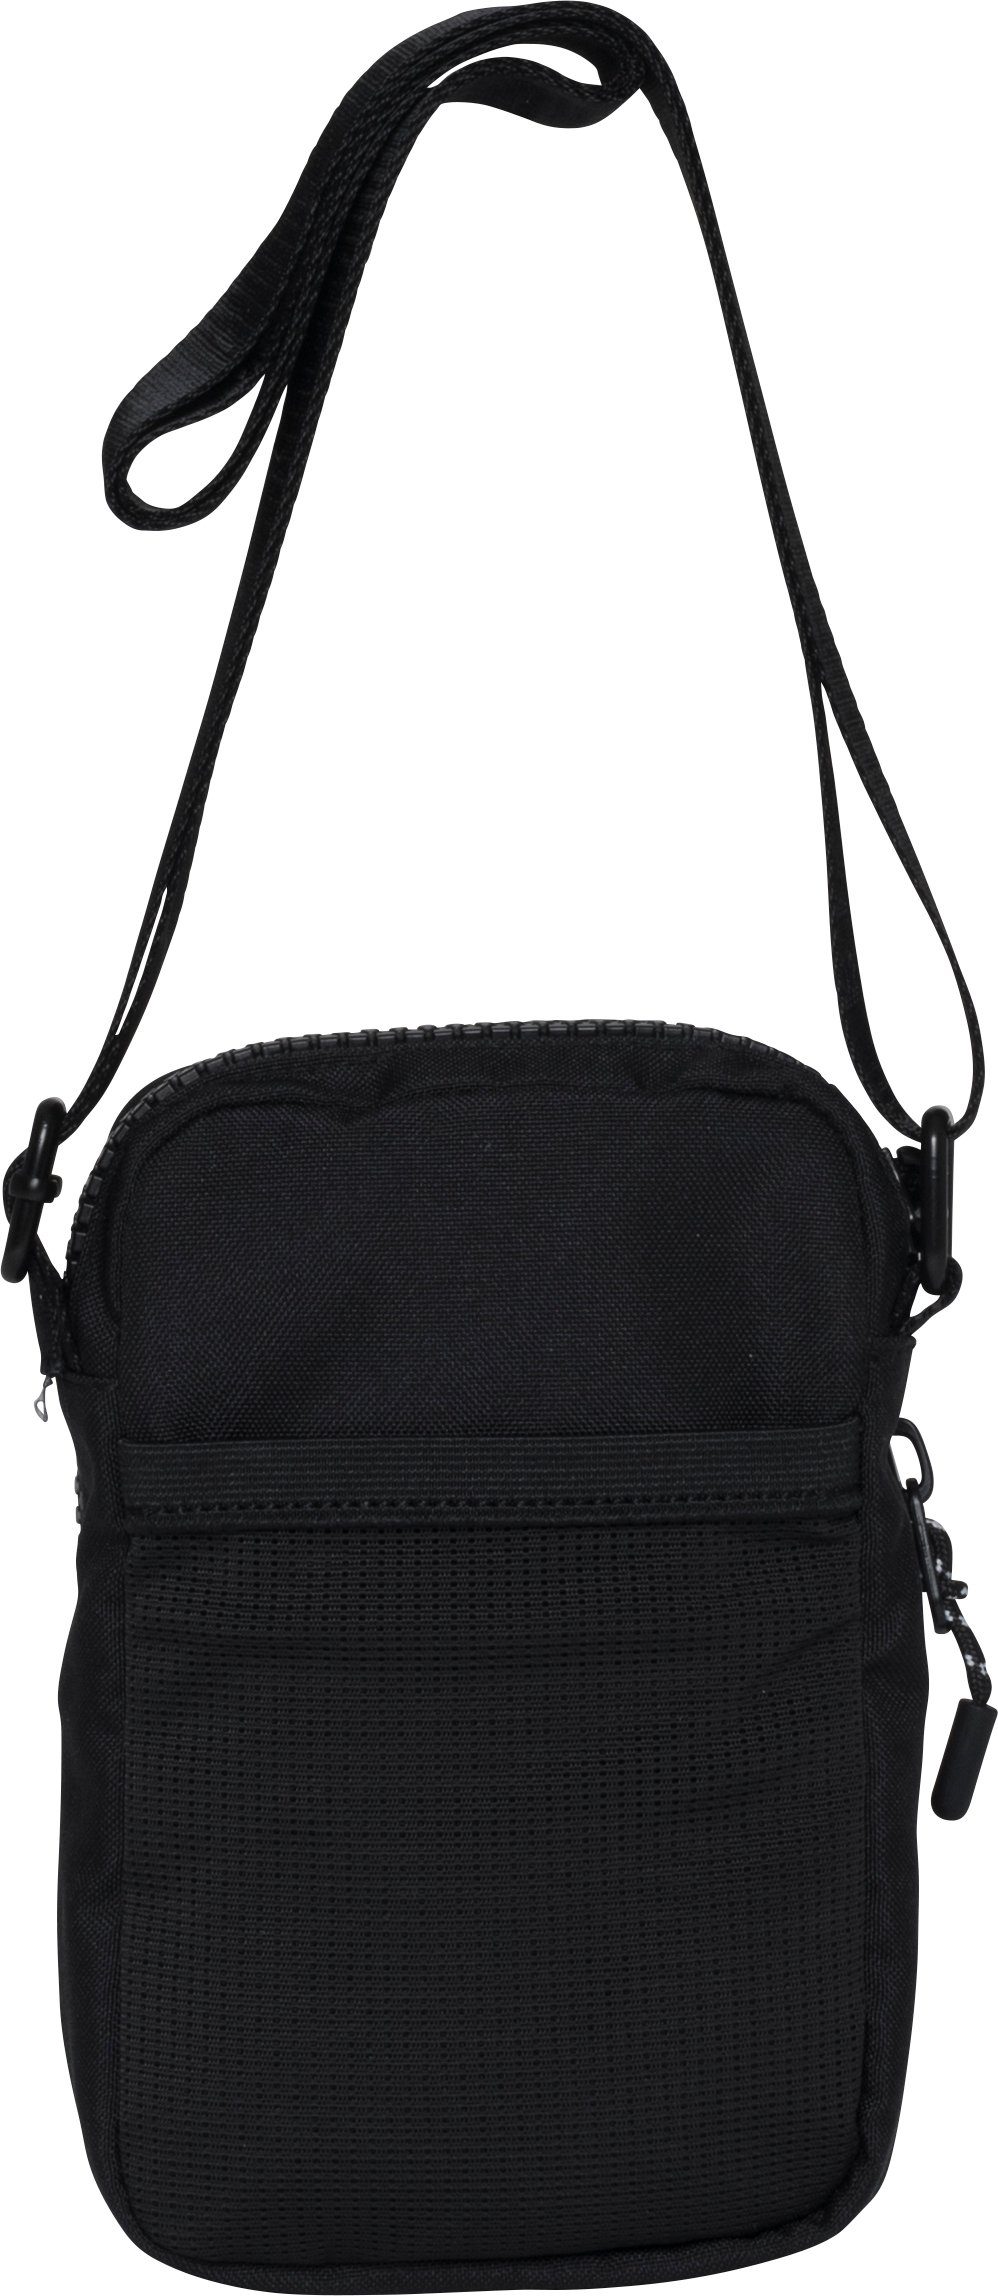 Beckmann Bauchtasche Umhängetasche Crossbodybag Sport Black Handtasche Schultertasche, Bold Stück), (1